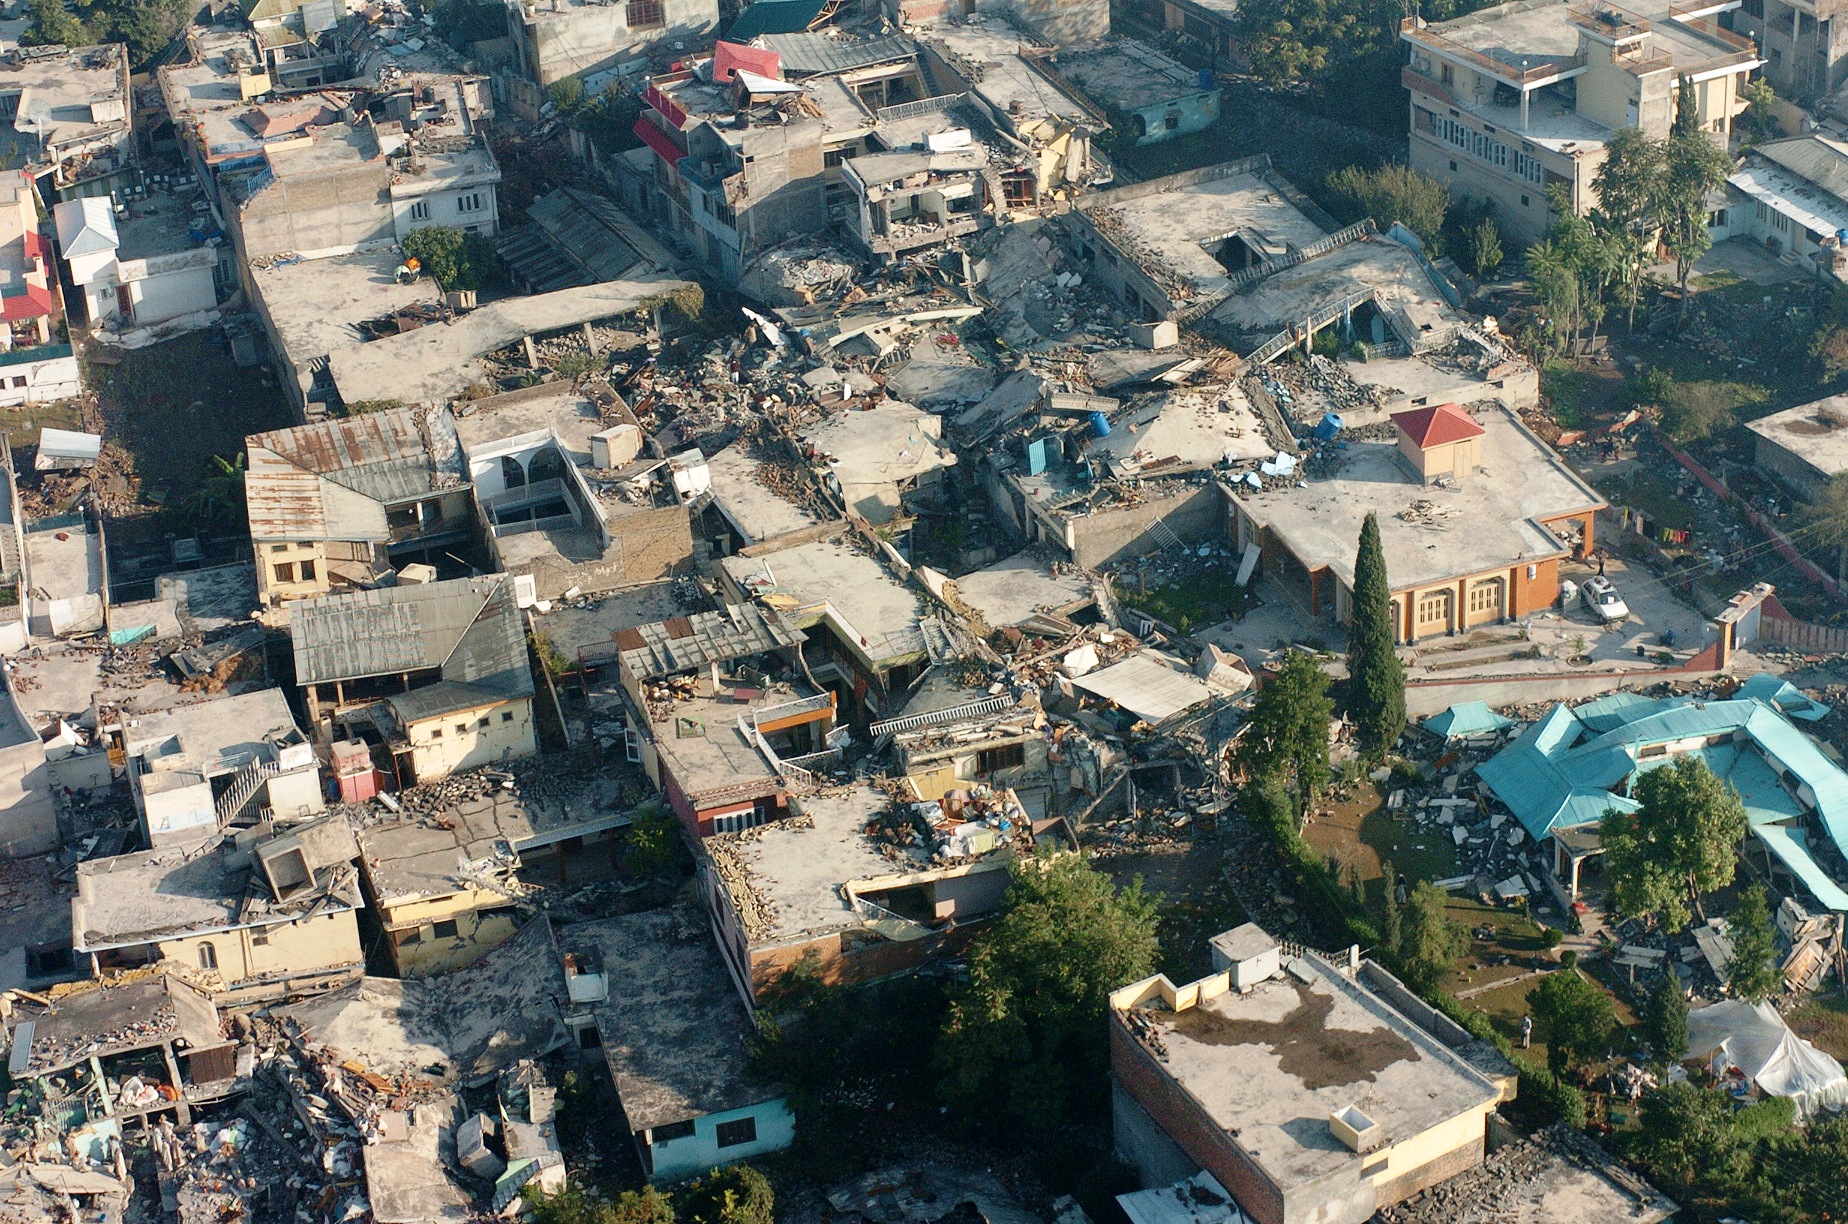 muzaffarabad earthquake damage 2005